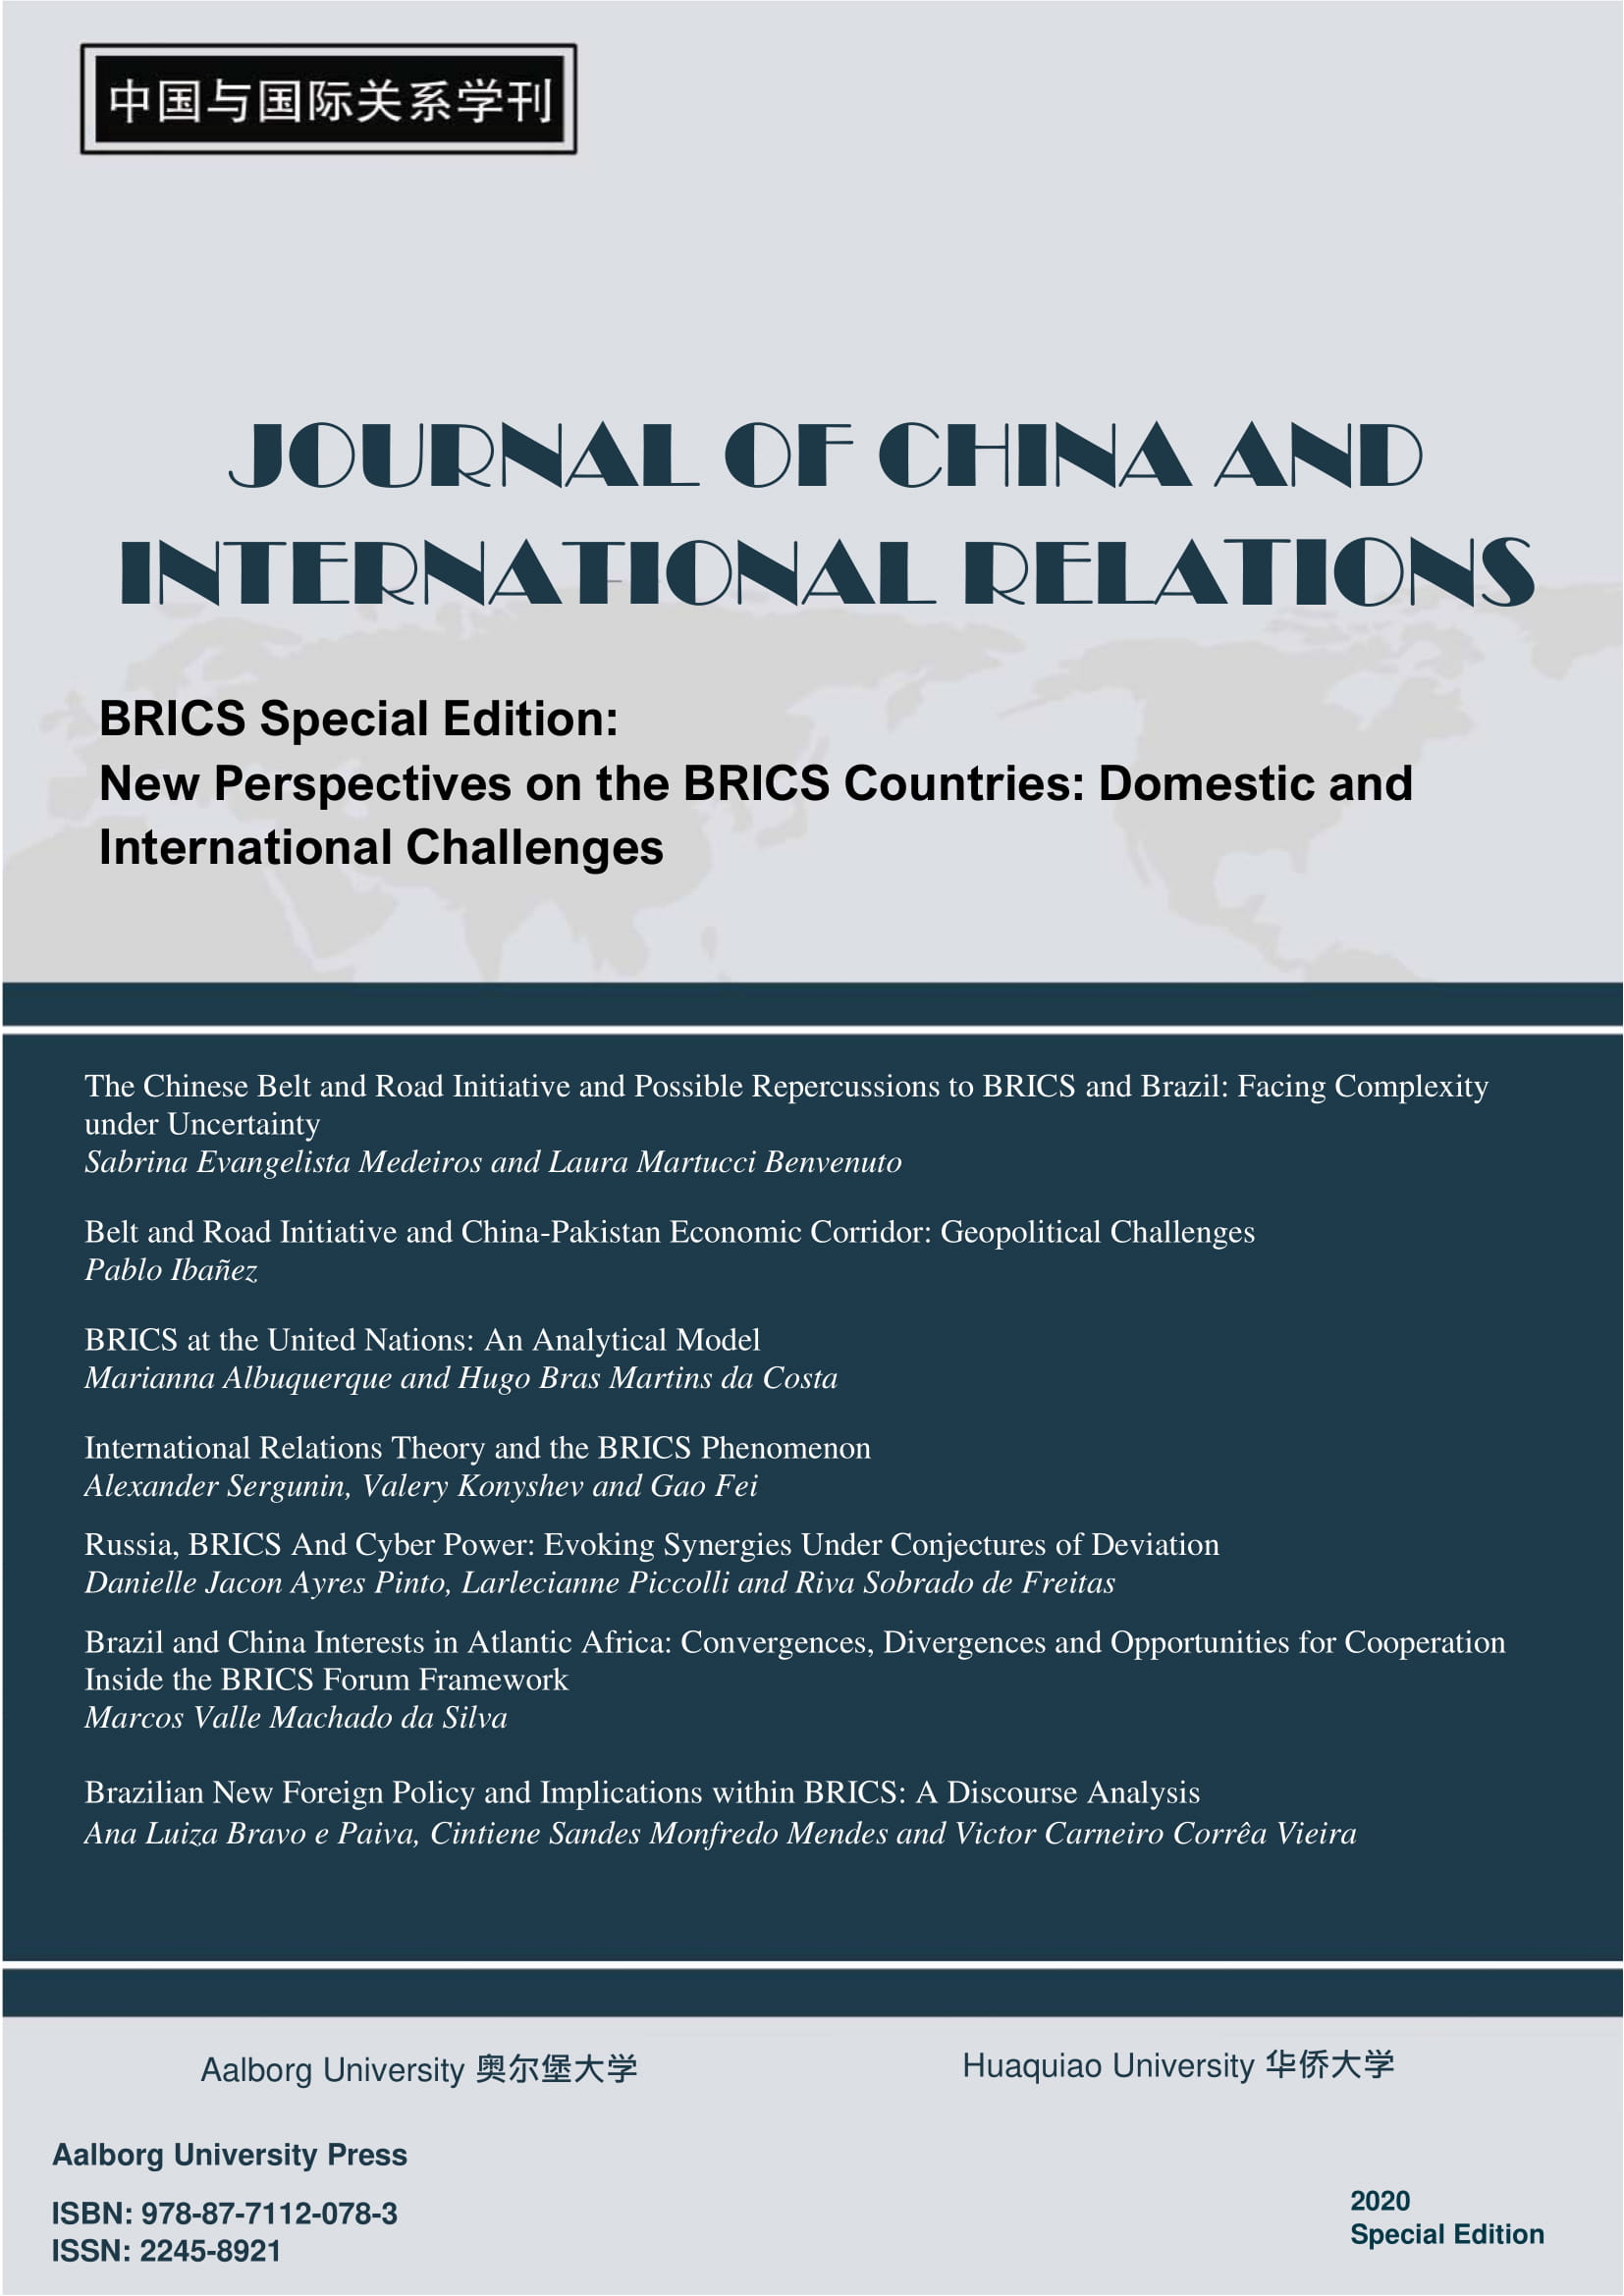 					View 2020: Special Edition: BRICS
				